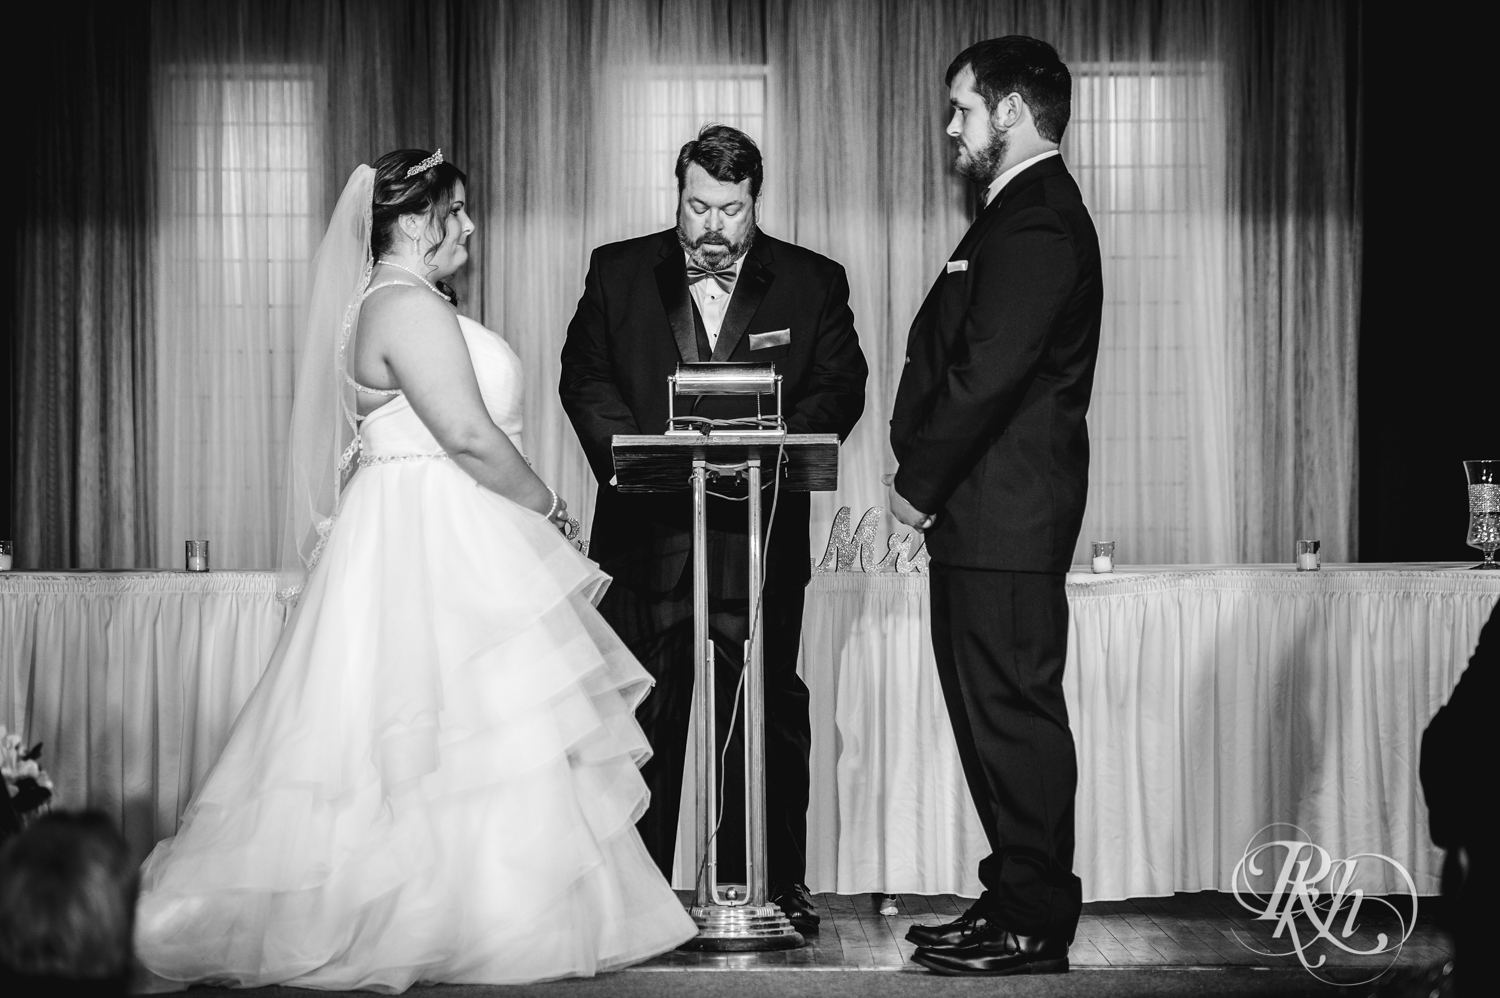 Bride and groom smile at wedding ceremony at Memories Ballroom in Port Washington, Wisconsin